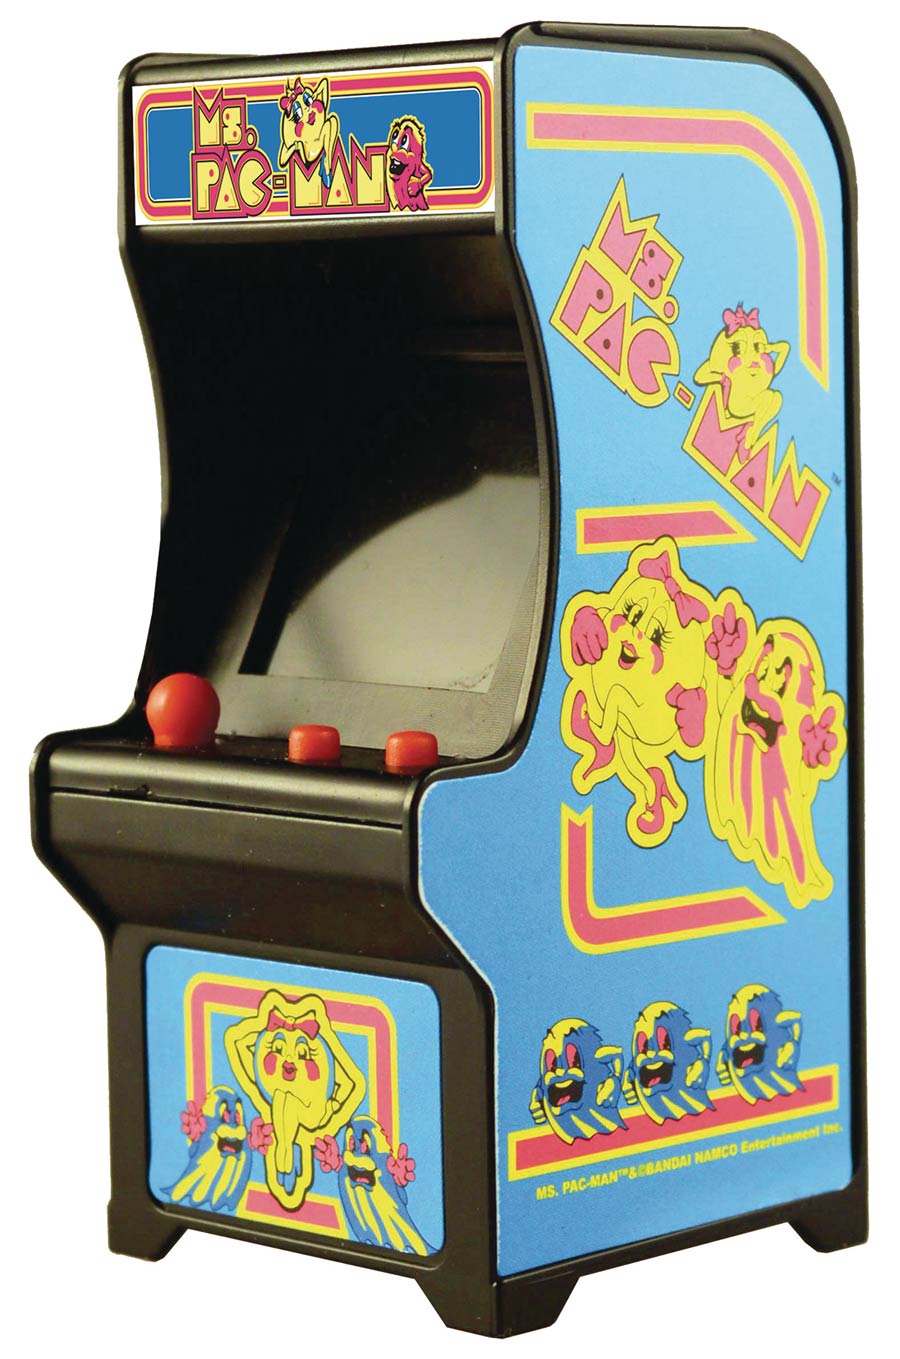 Tiny Arcade Tabletop Game - Ms Pac-Man